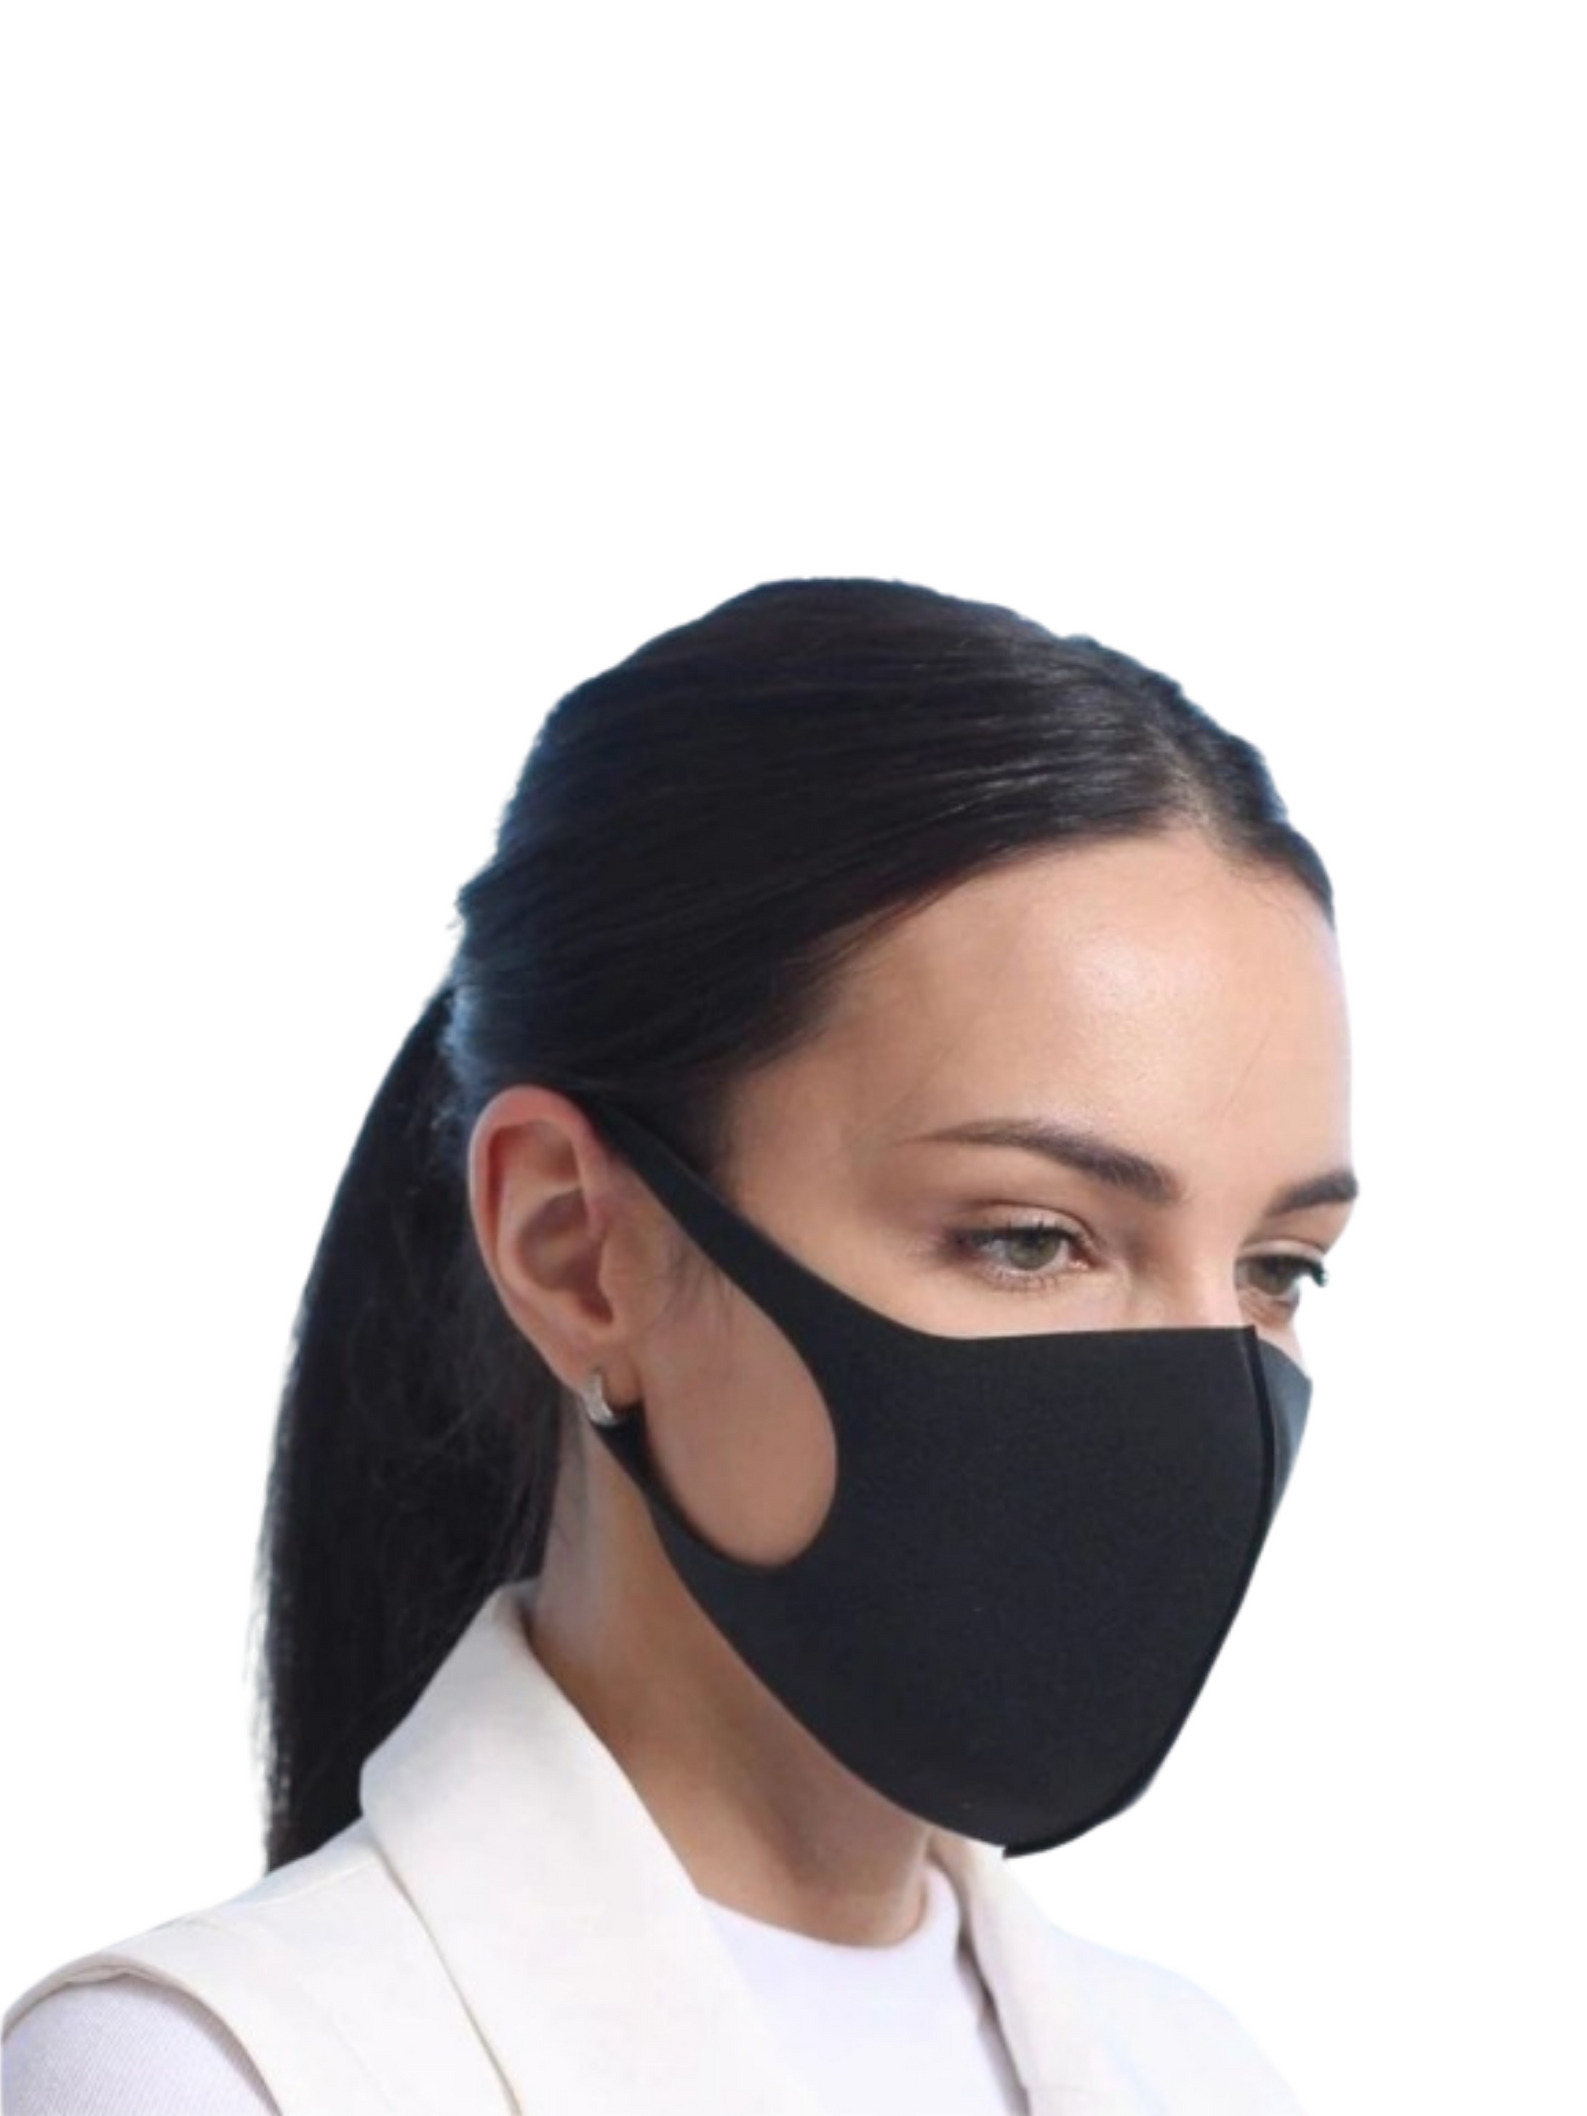 Маска для лица защитная многоразовая. Маска гигиеническая. Чёрная маска для лица медицинская. Маска для лица тканевая защитная. Быстрая маска позволяет